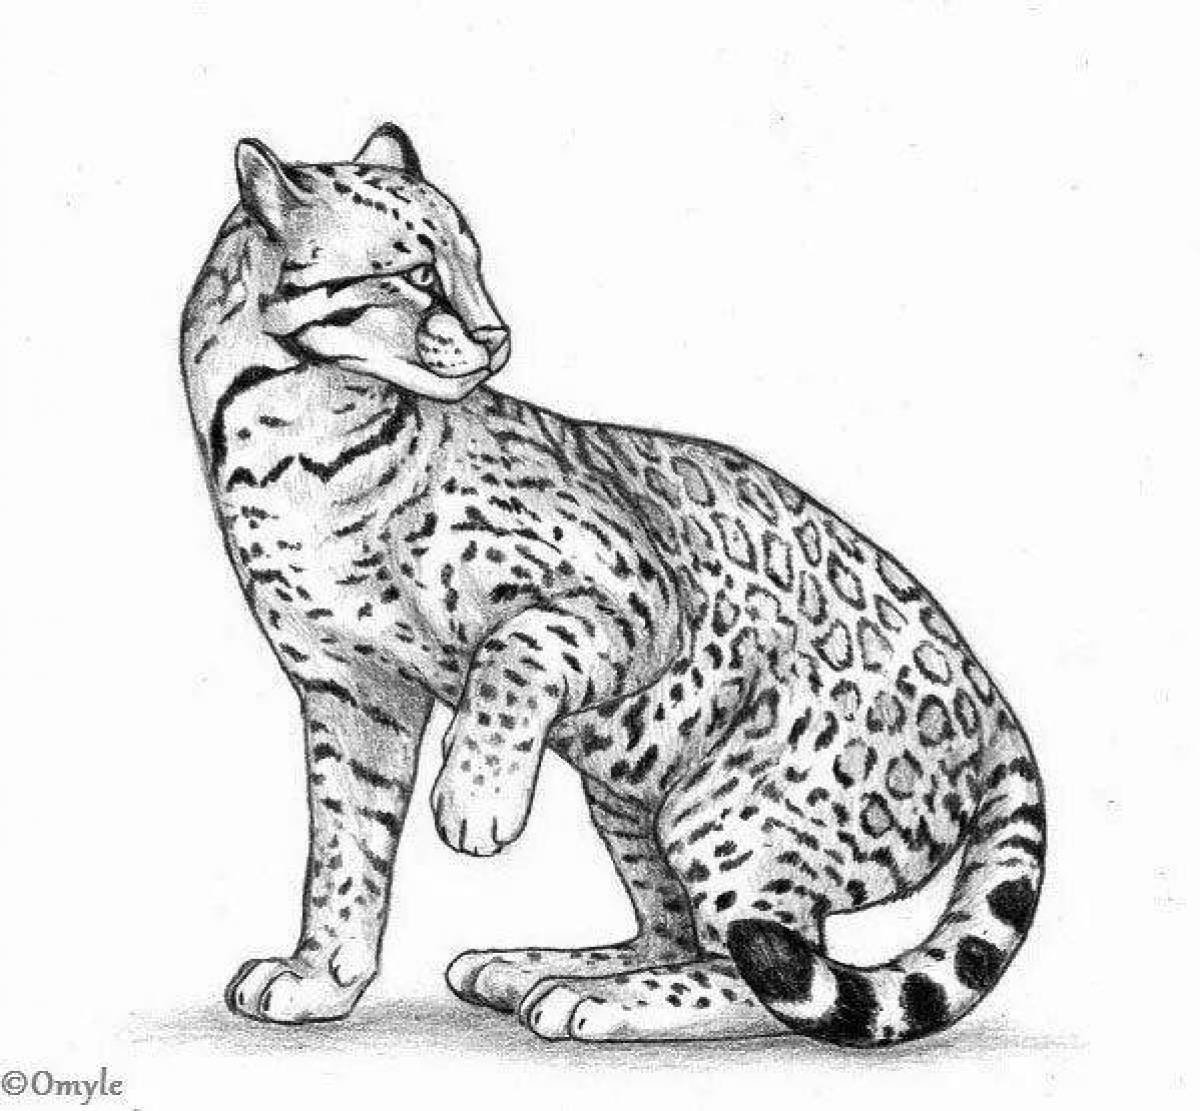 Кошки с леопардовым окрасом